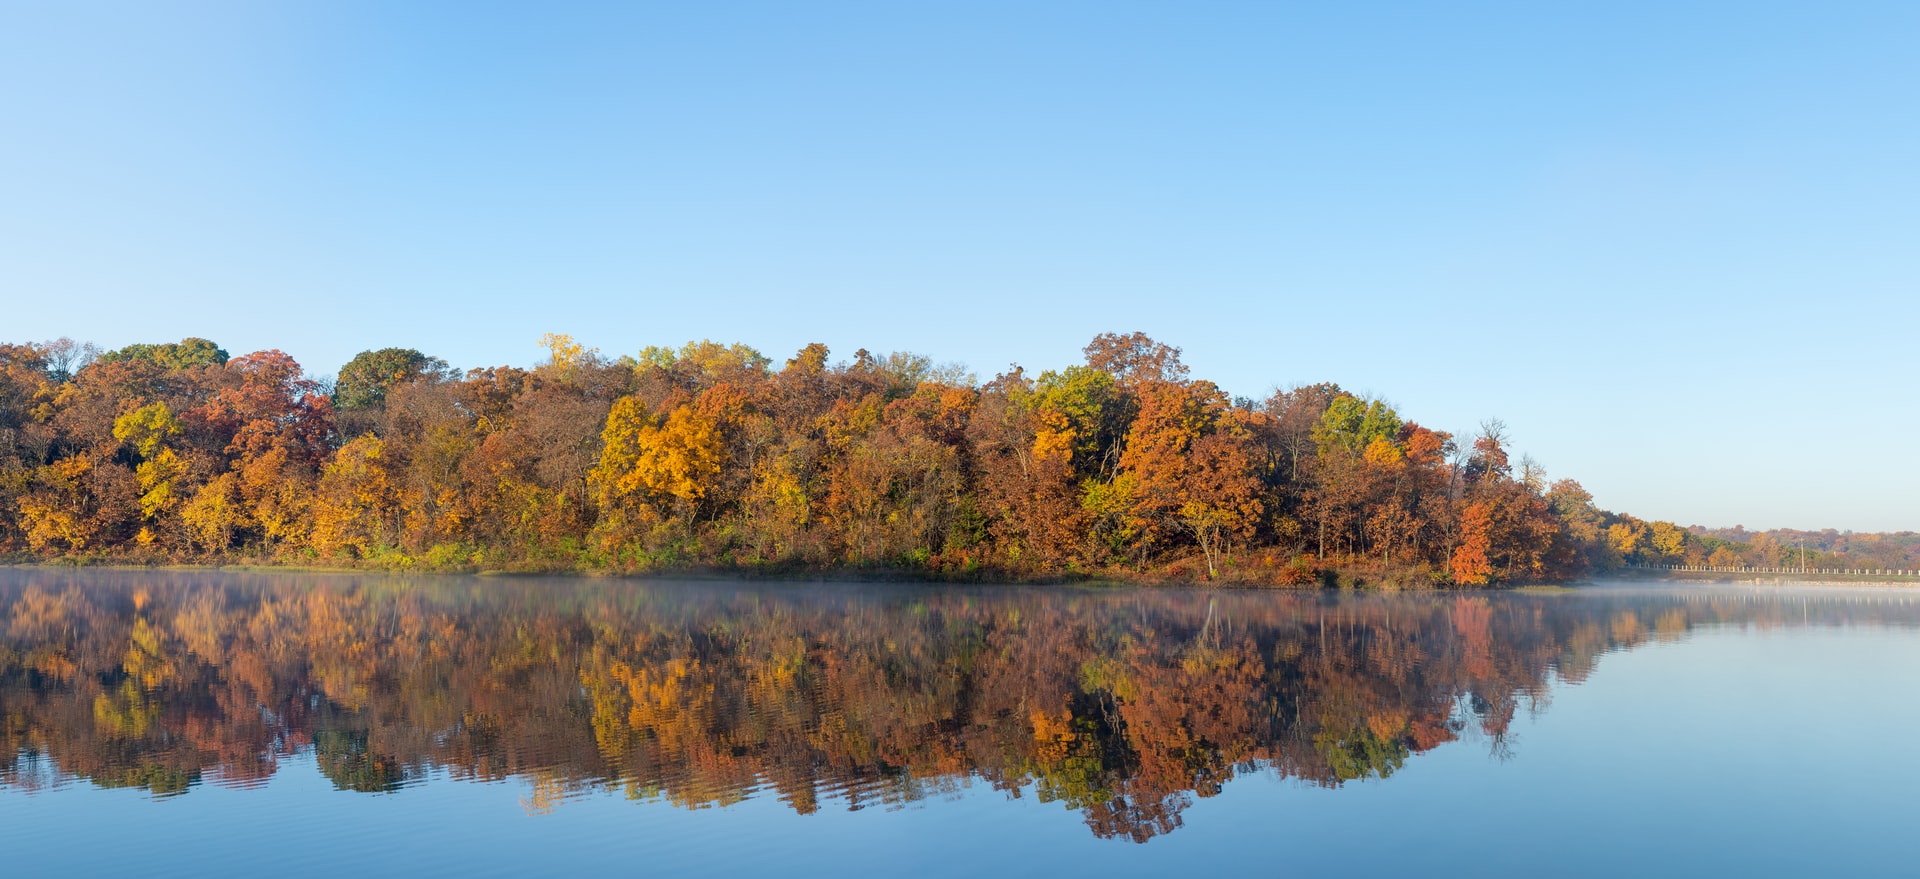 Kansas river and fall trees next to river bank